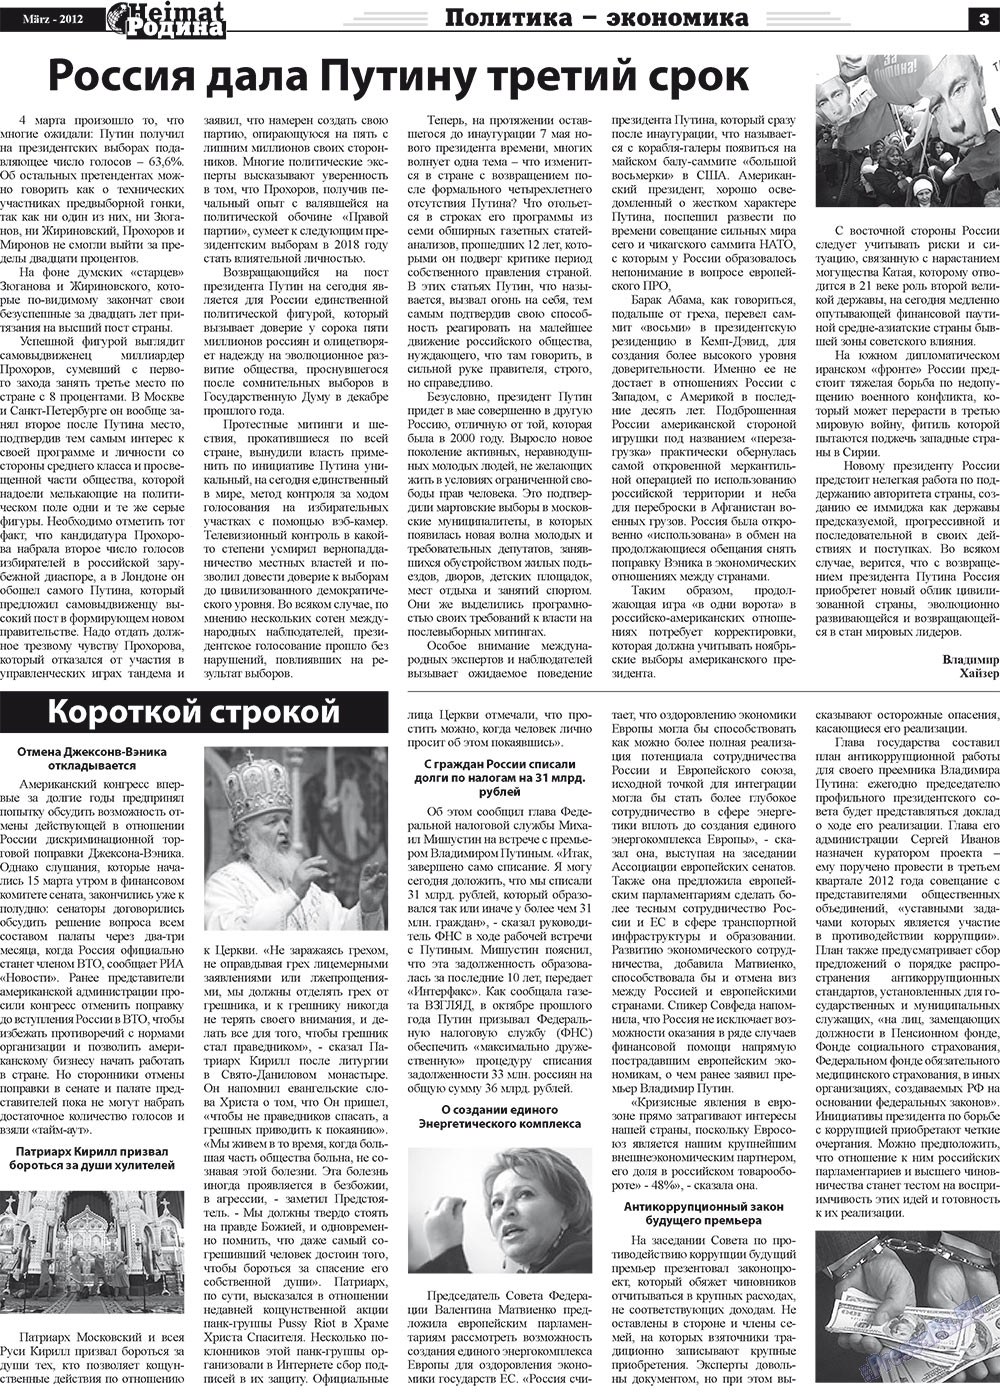 Heimat-Родина, газета. 2012 №3 стр.3